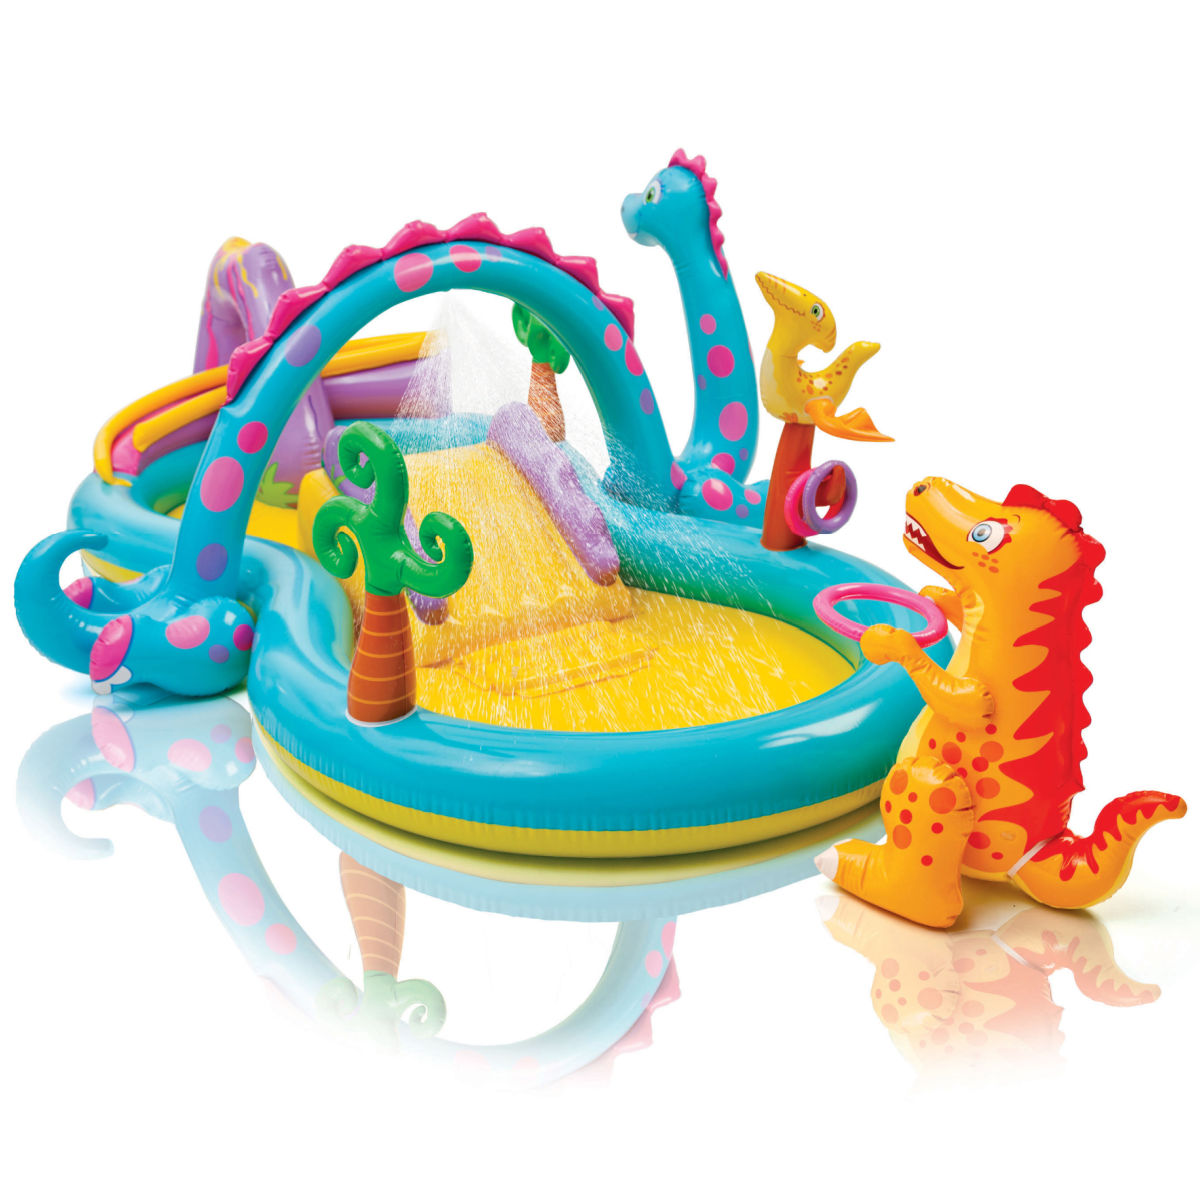 Intex Dinoland Play Center Inflatable Pool